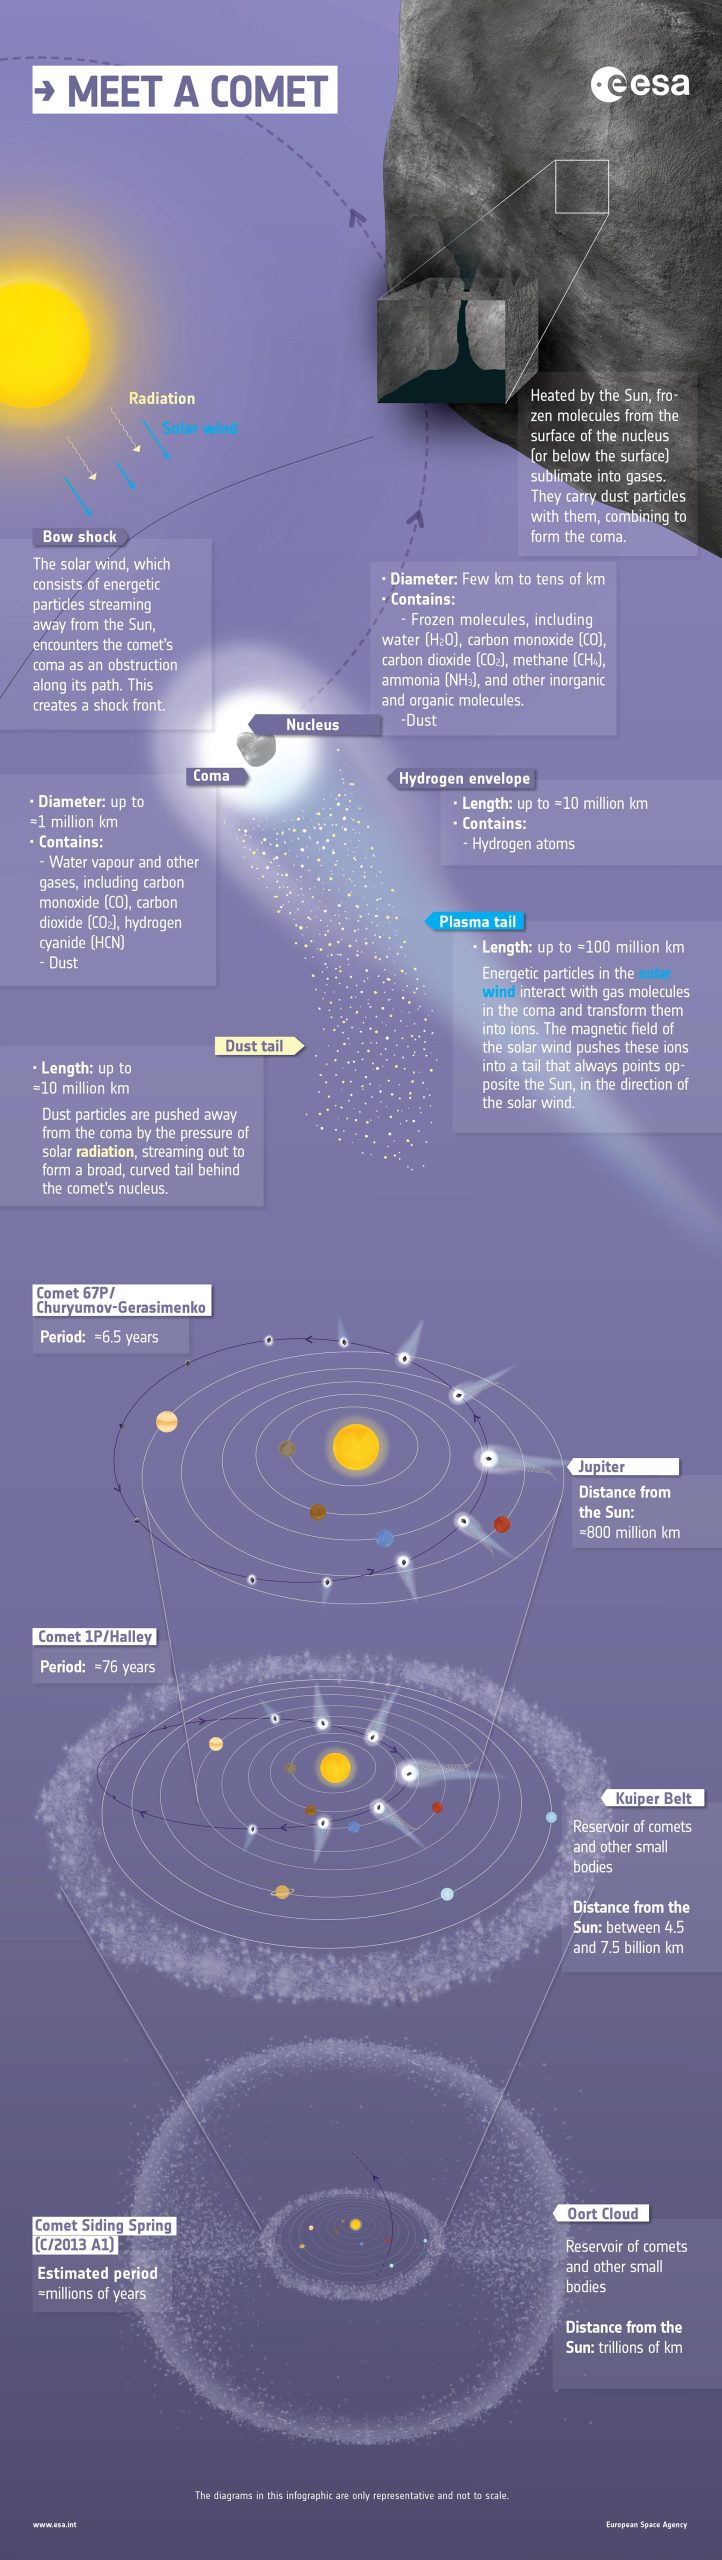 Meet a Comet Anatomy Infographic